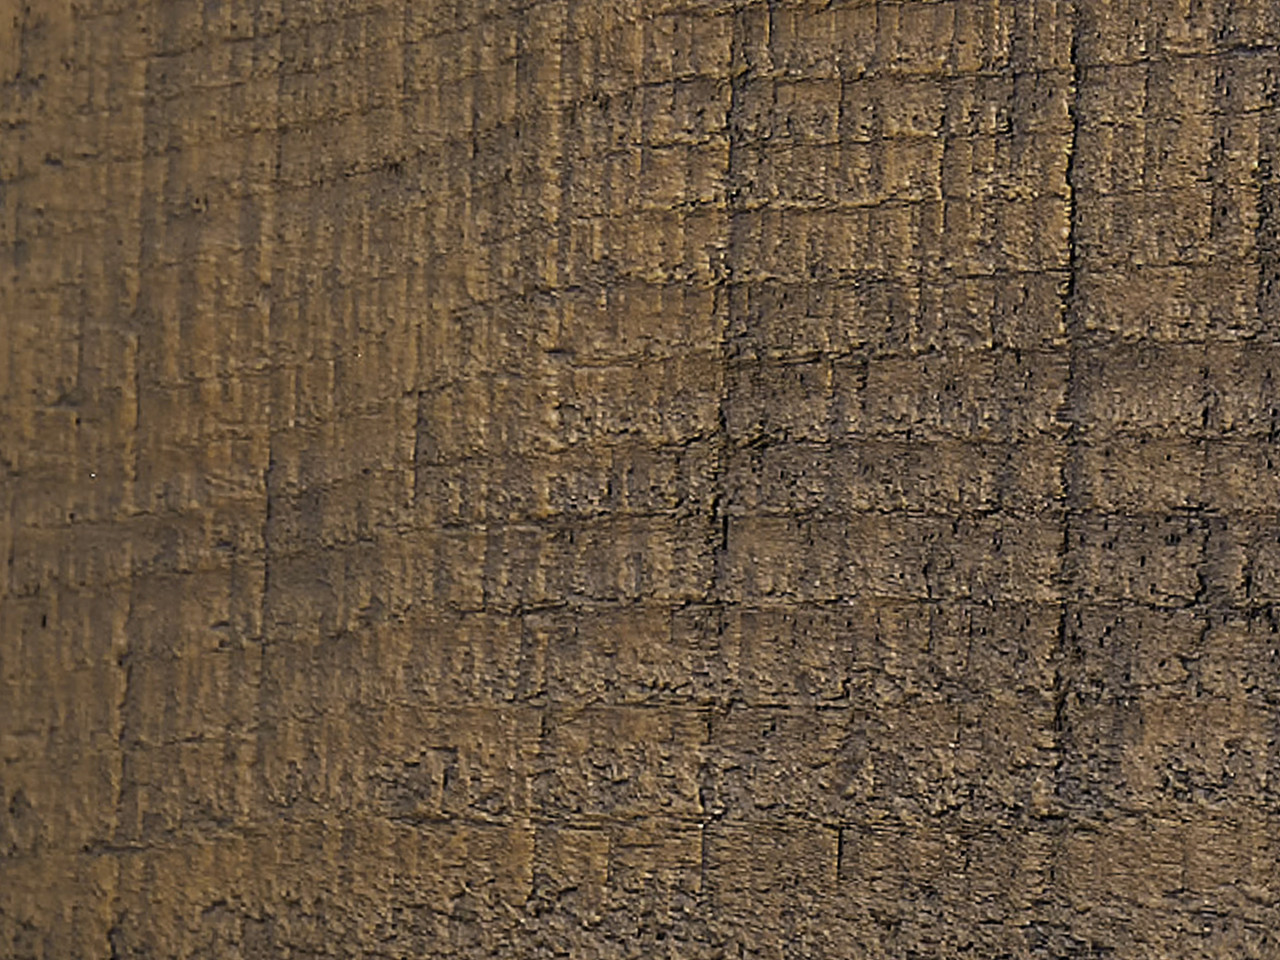 Contemporary Faux Brick Wall Panel